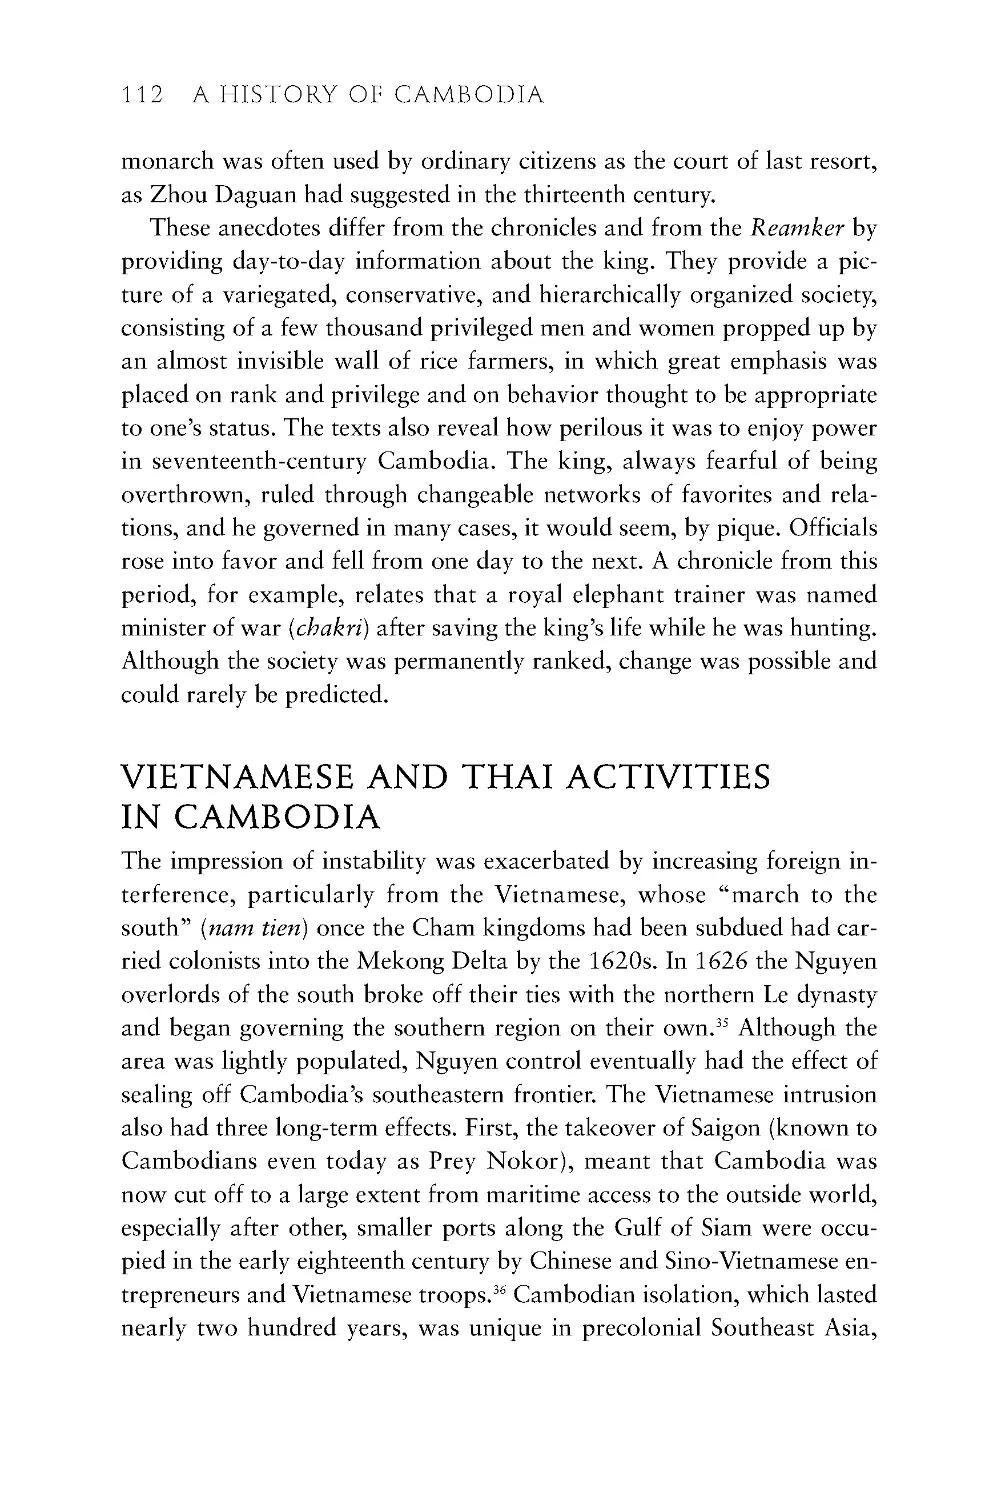 Vietnamese and Thai Activities in Cambodia